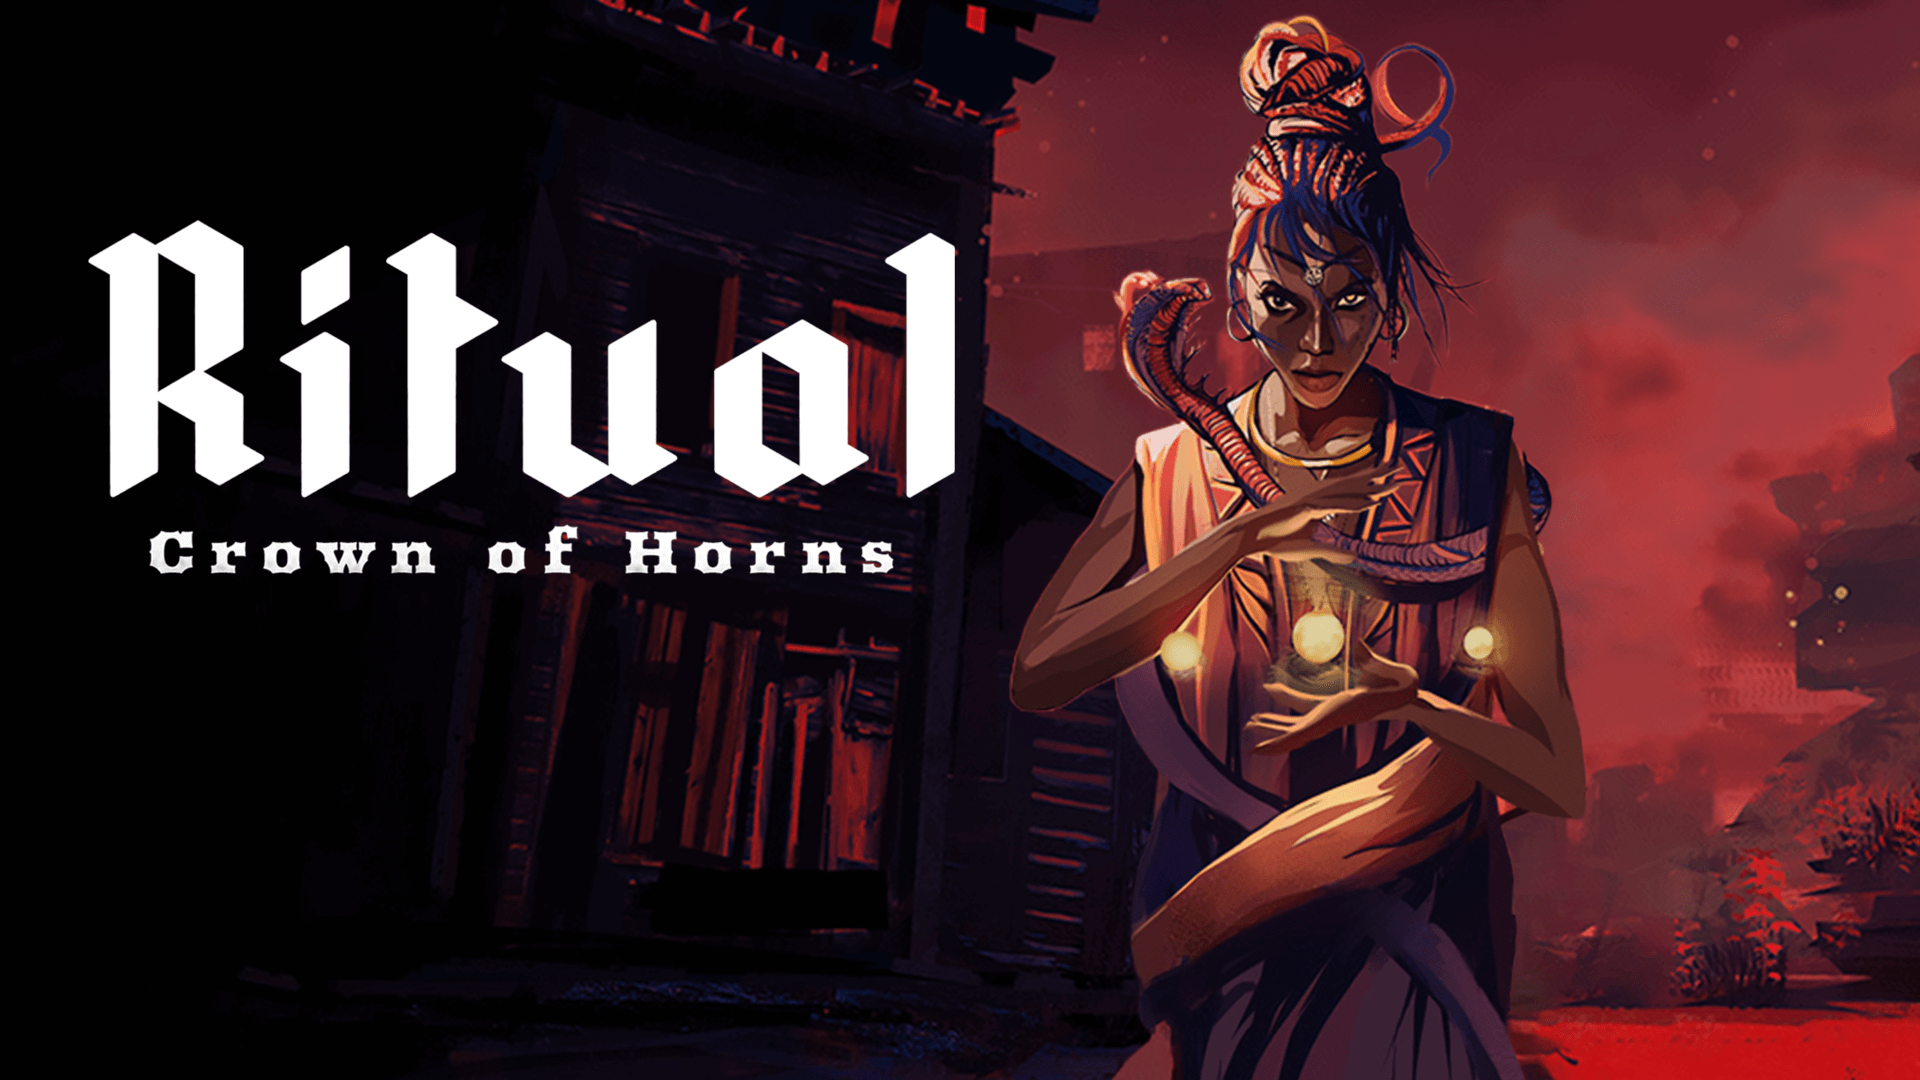 Ritual: Crown of Horns